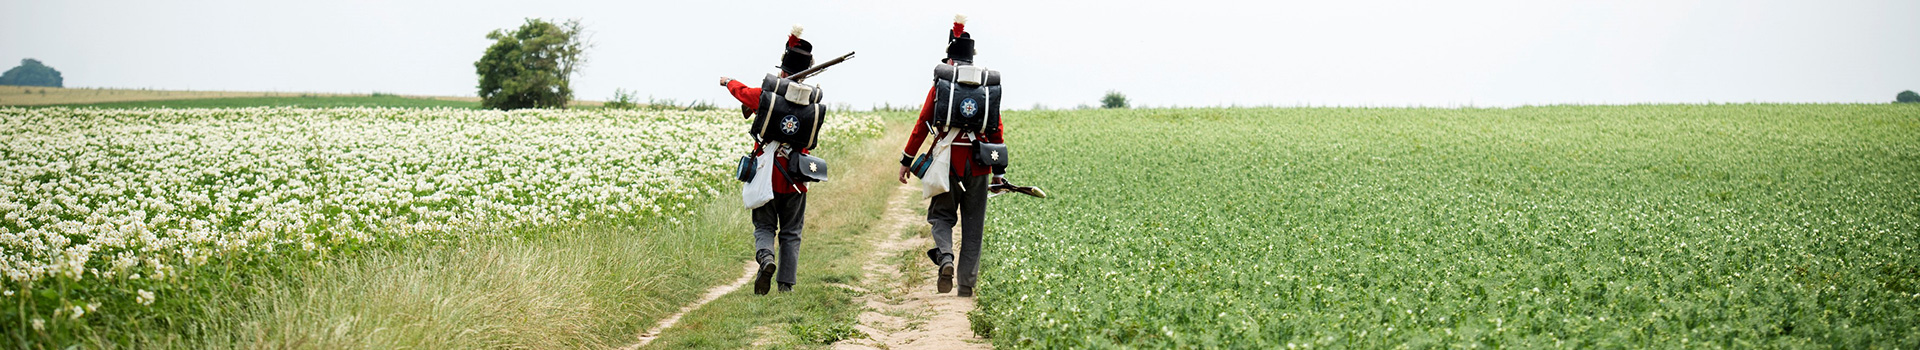 Waterloo Uncovered, historical re-enactors